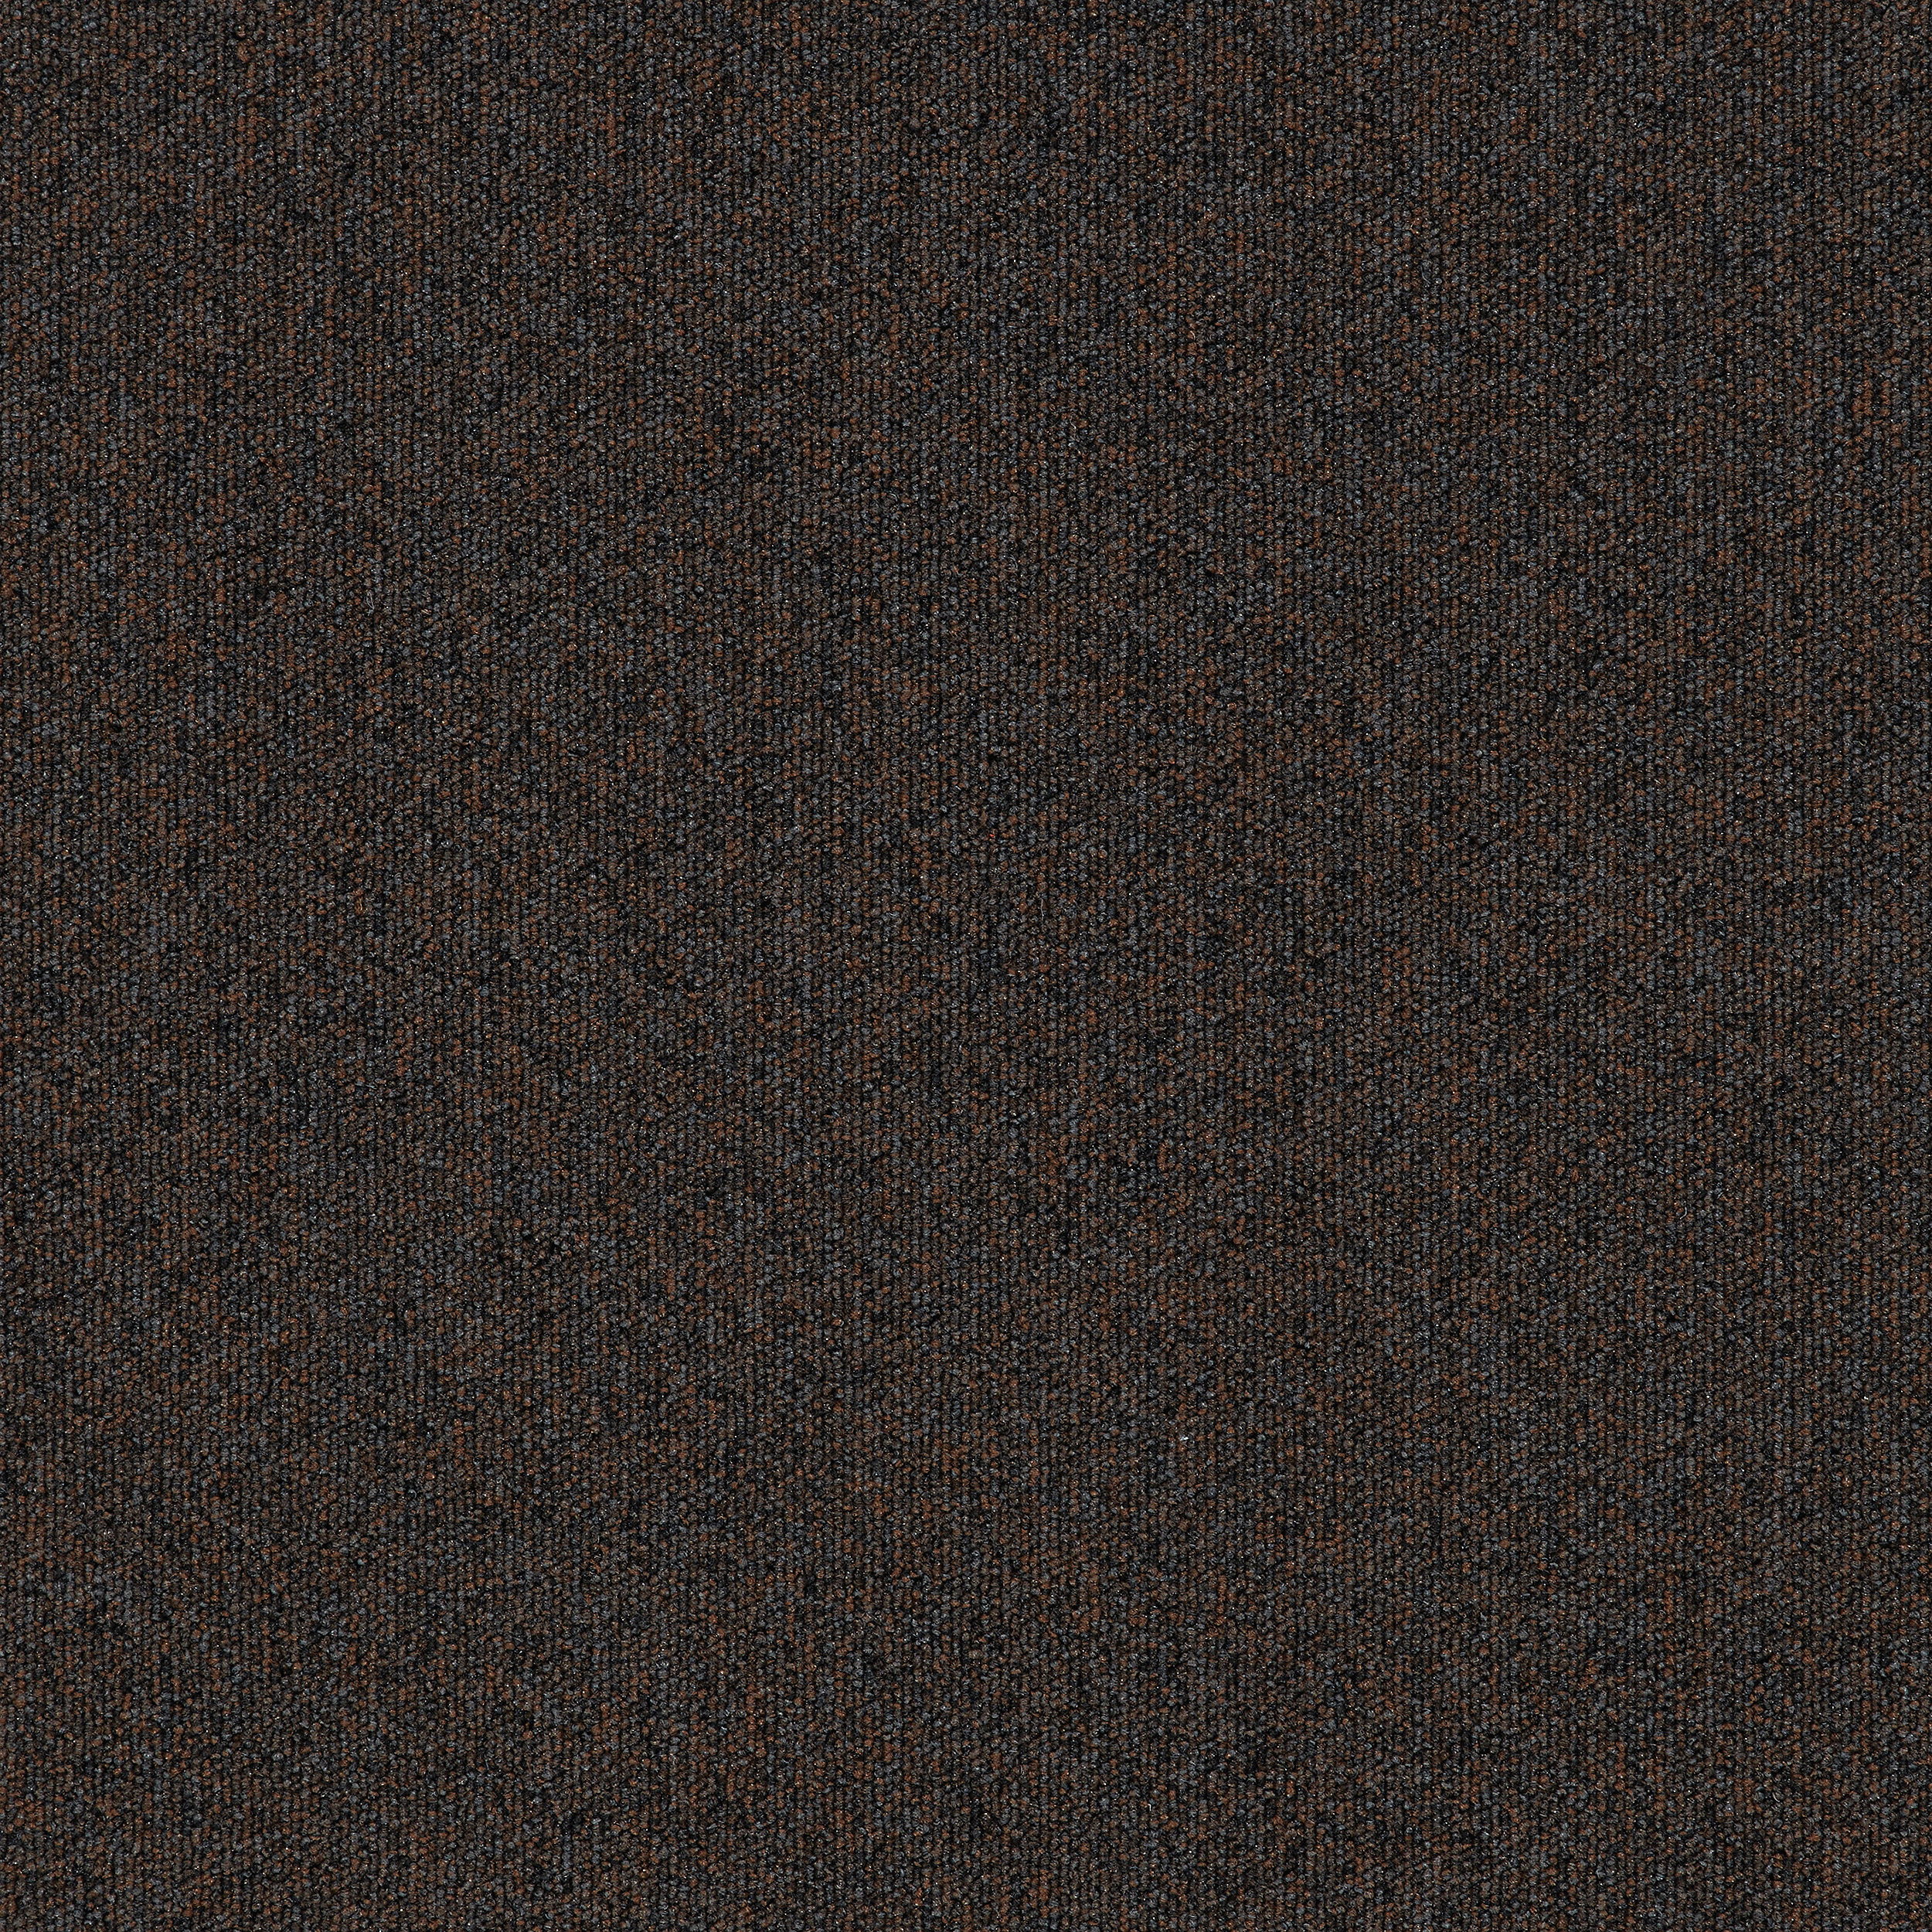 Heuga 727 Carpet Tile In Chocolate image number 15